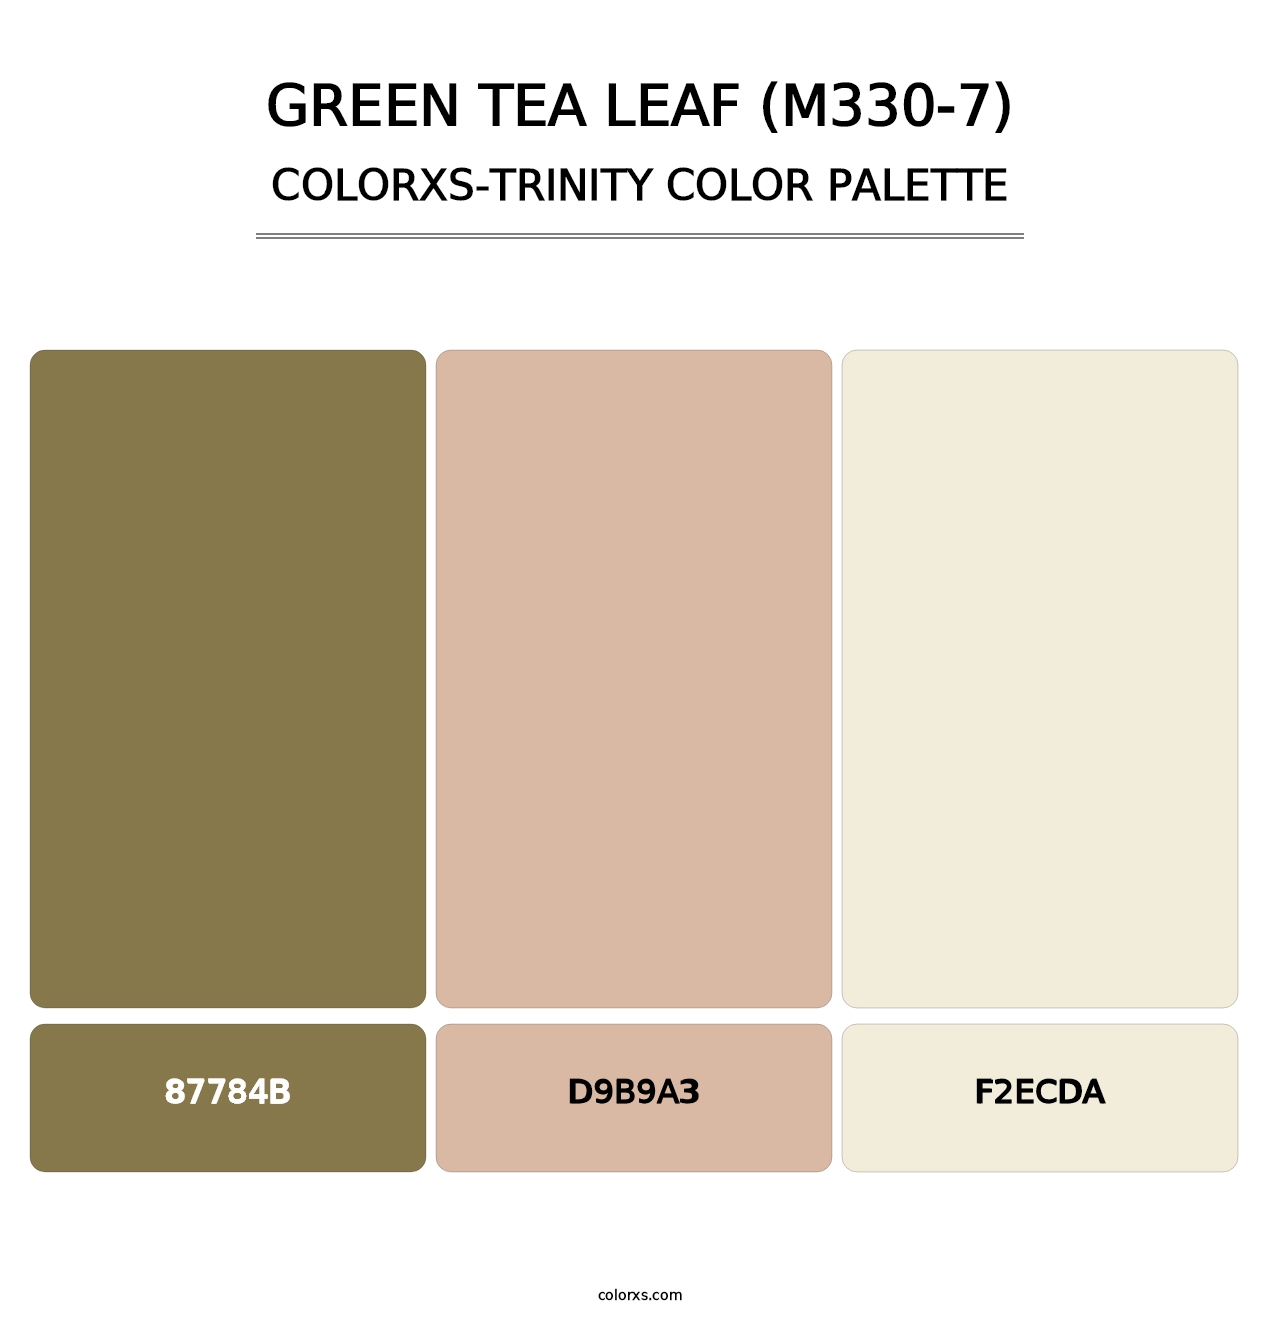 Green Tea Leaf (M330-7) - Colorxs Trinity Palette